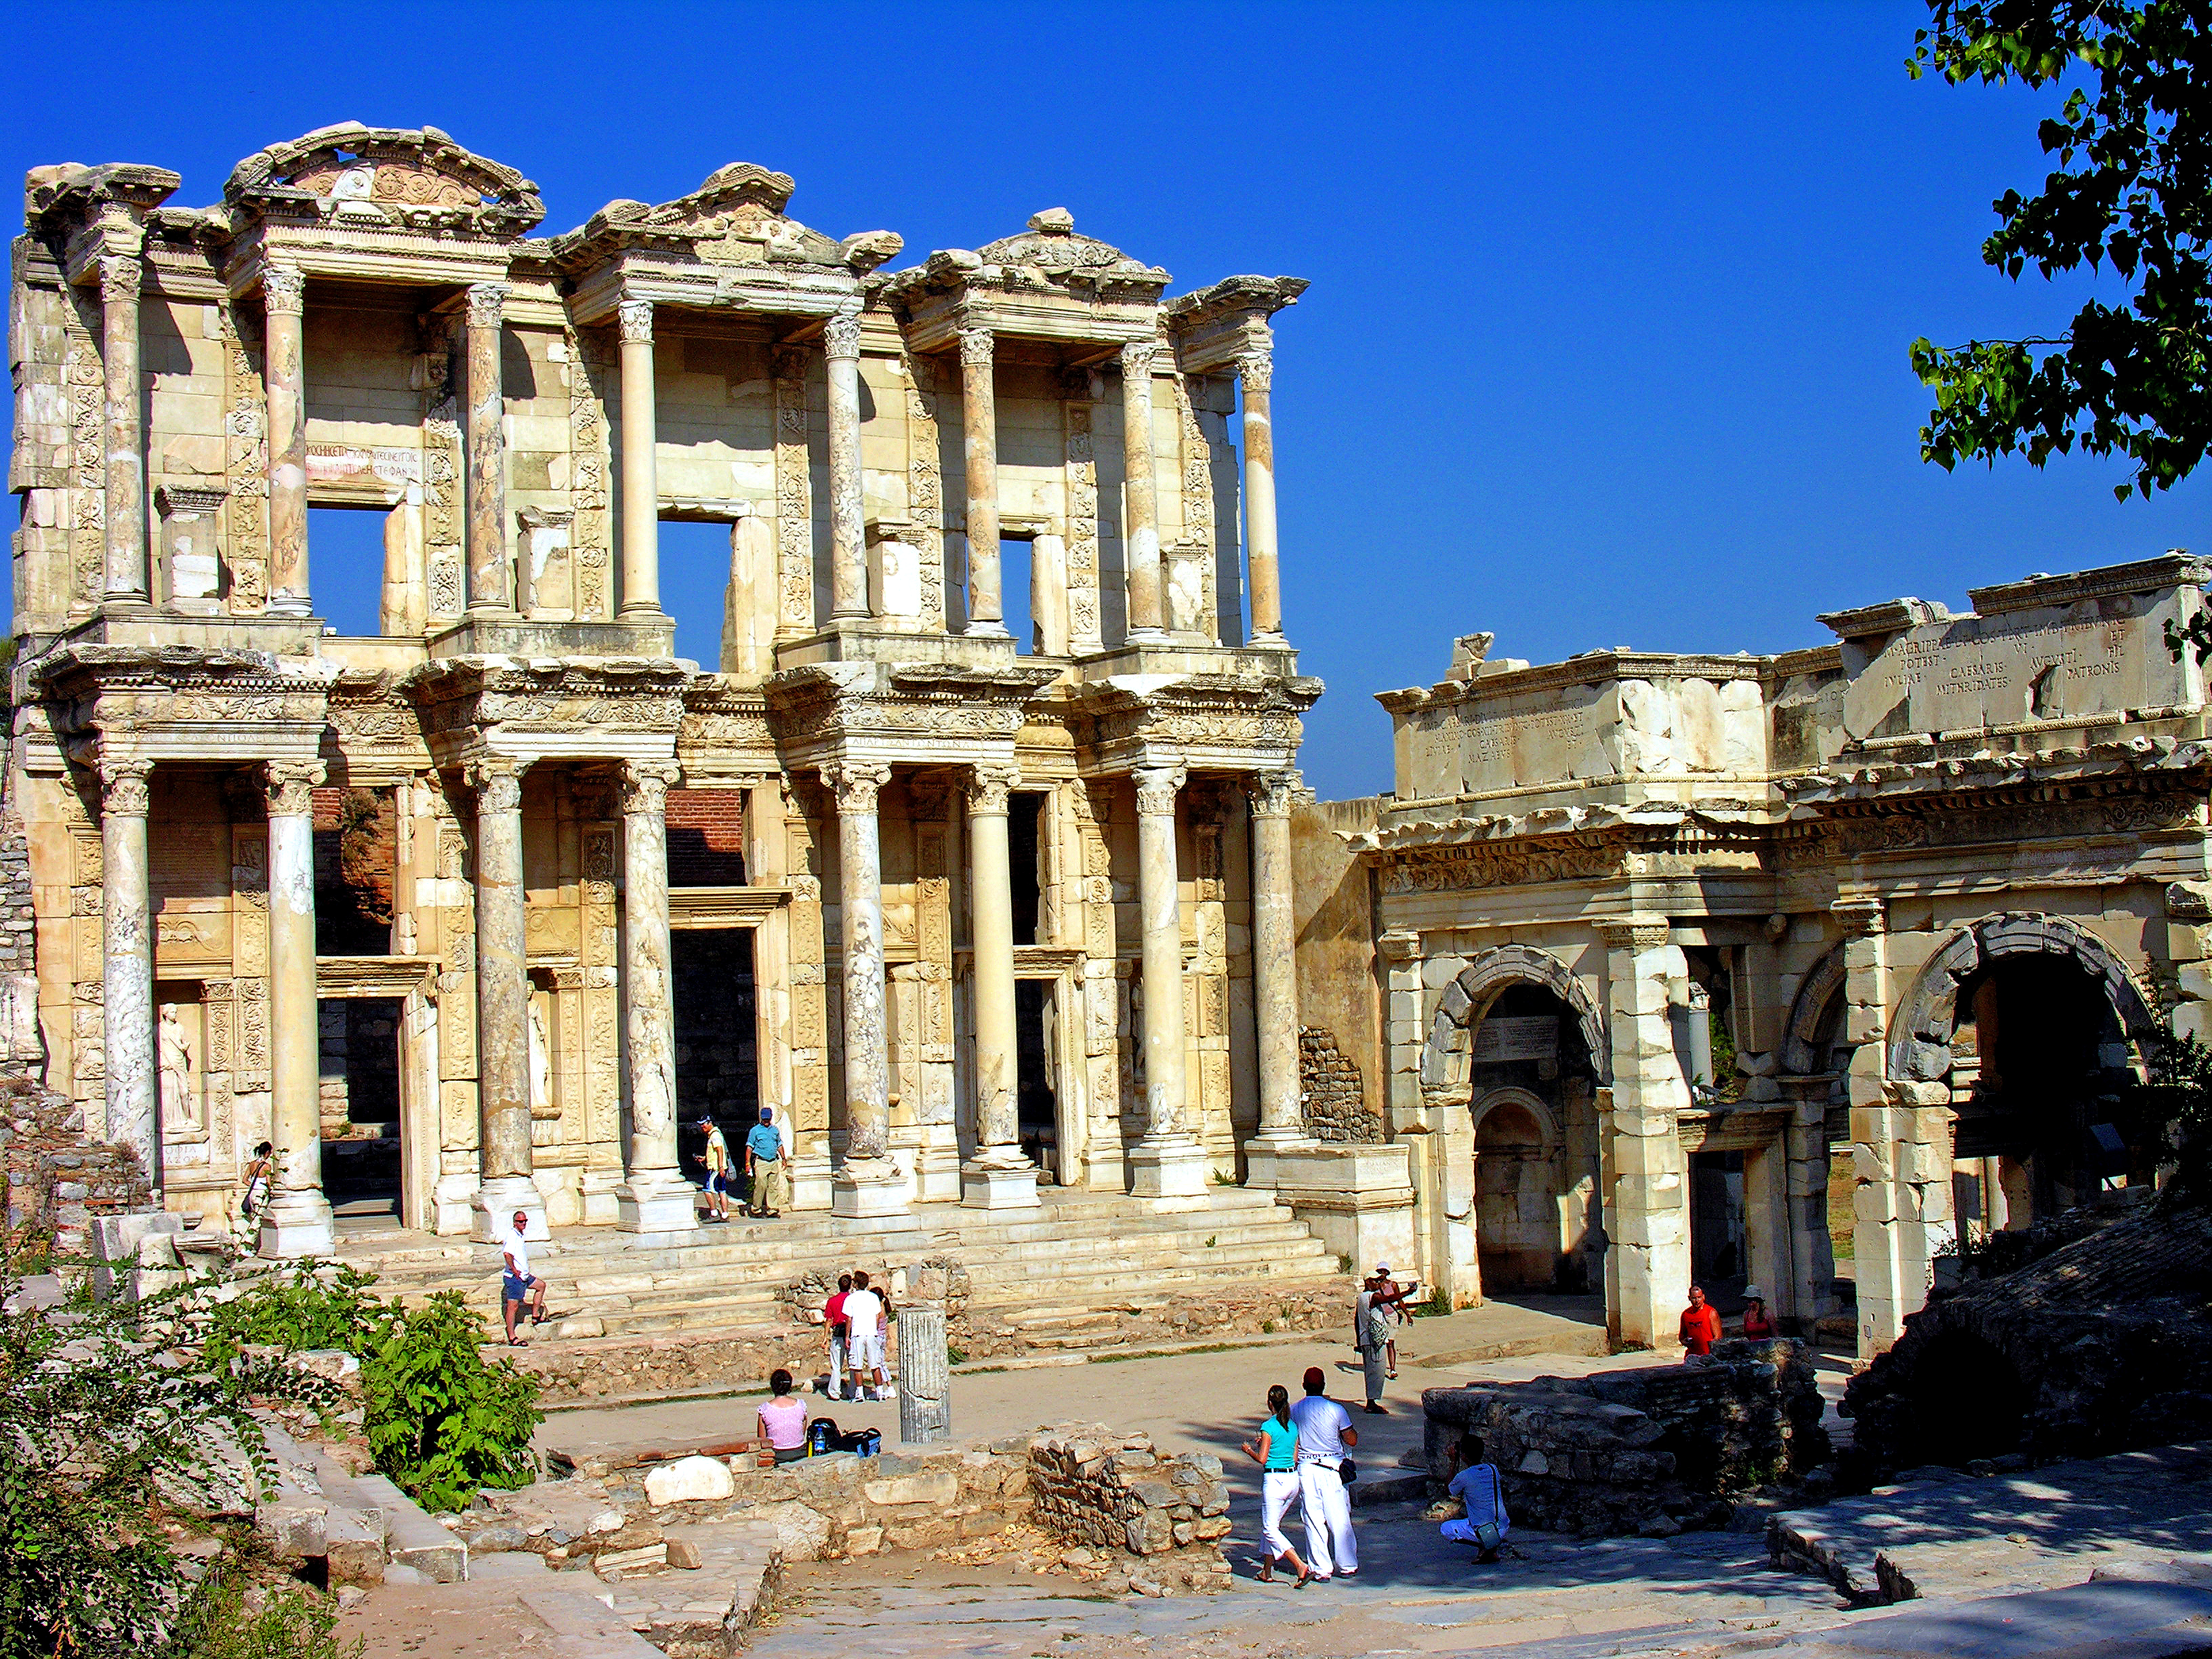 File:Celsus library in Ephesus.jpg - Wikimedia Commons